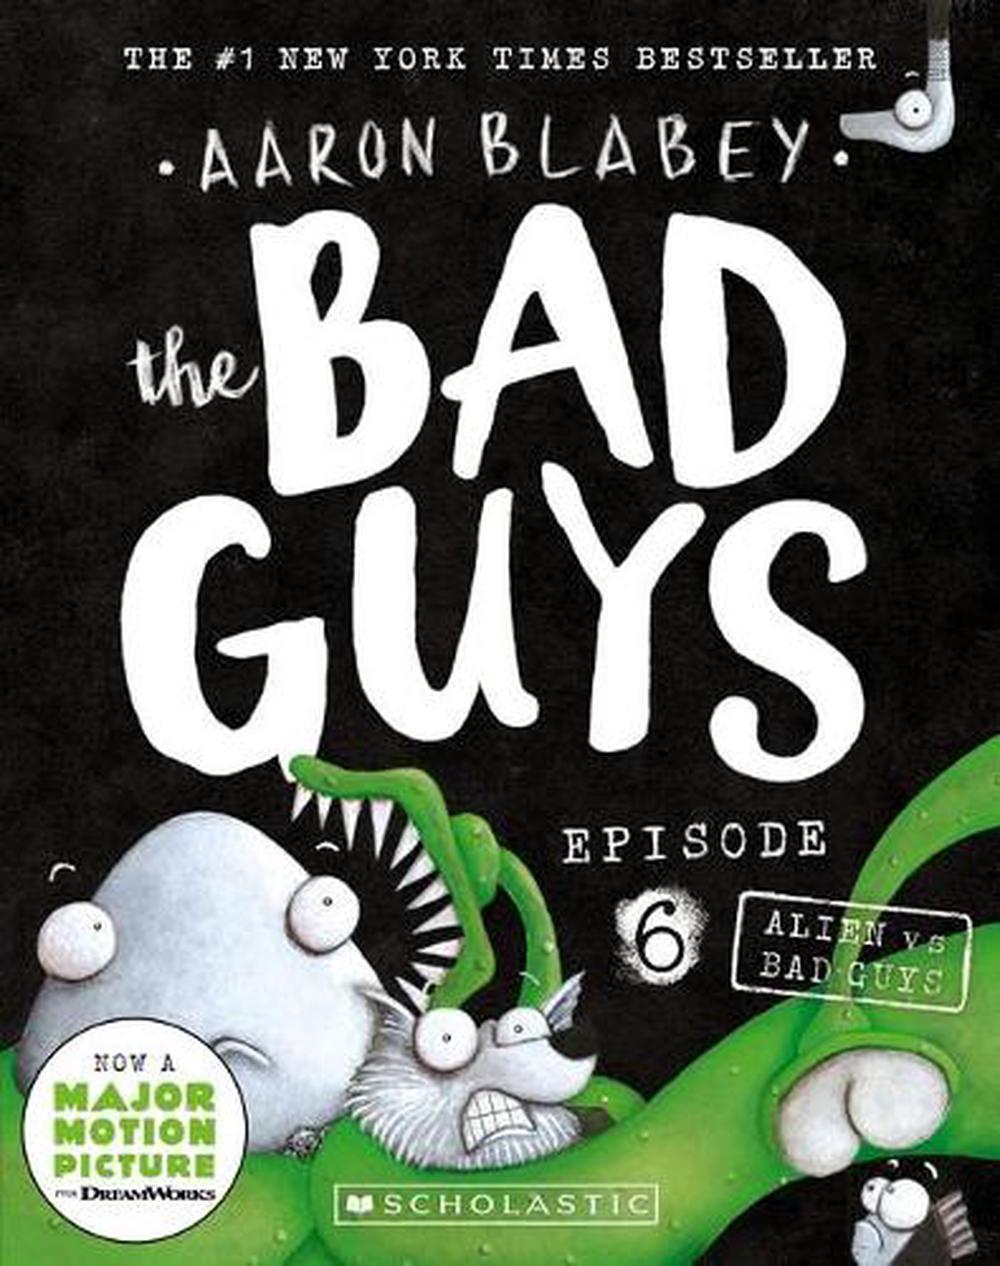 Bad guys the book series - lawfer